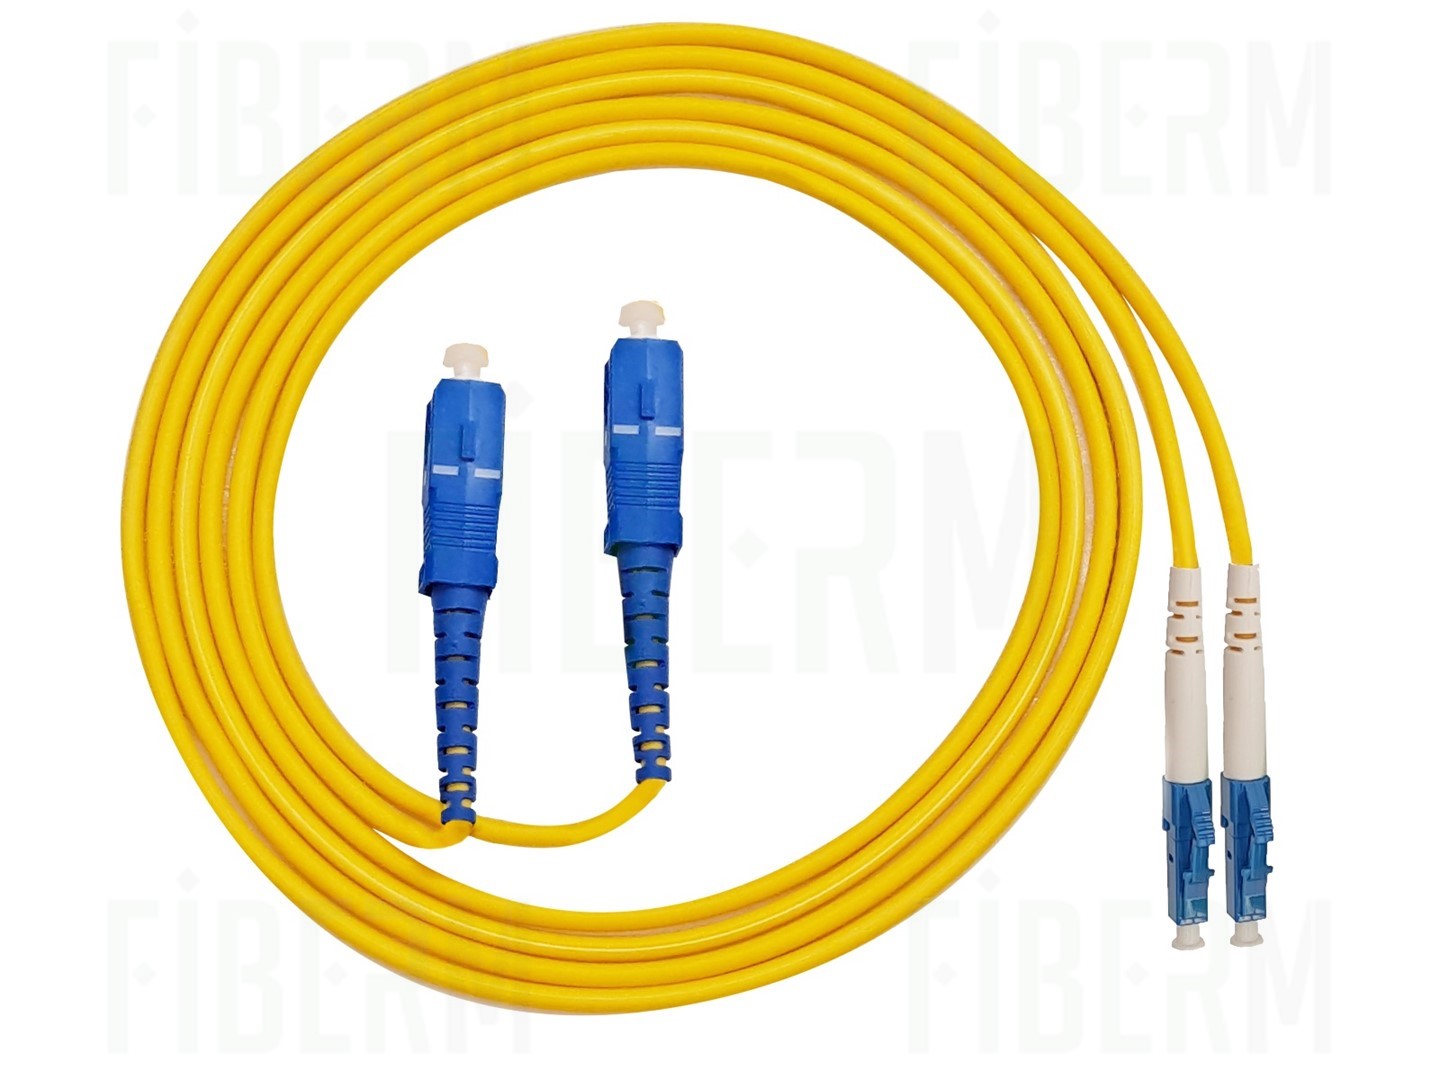 FIBERM GOLD patchcord SC/UPC-LC/UPC 3m Single Mode Duplex fiber G652D 2